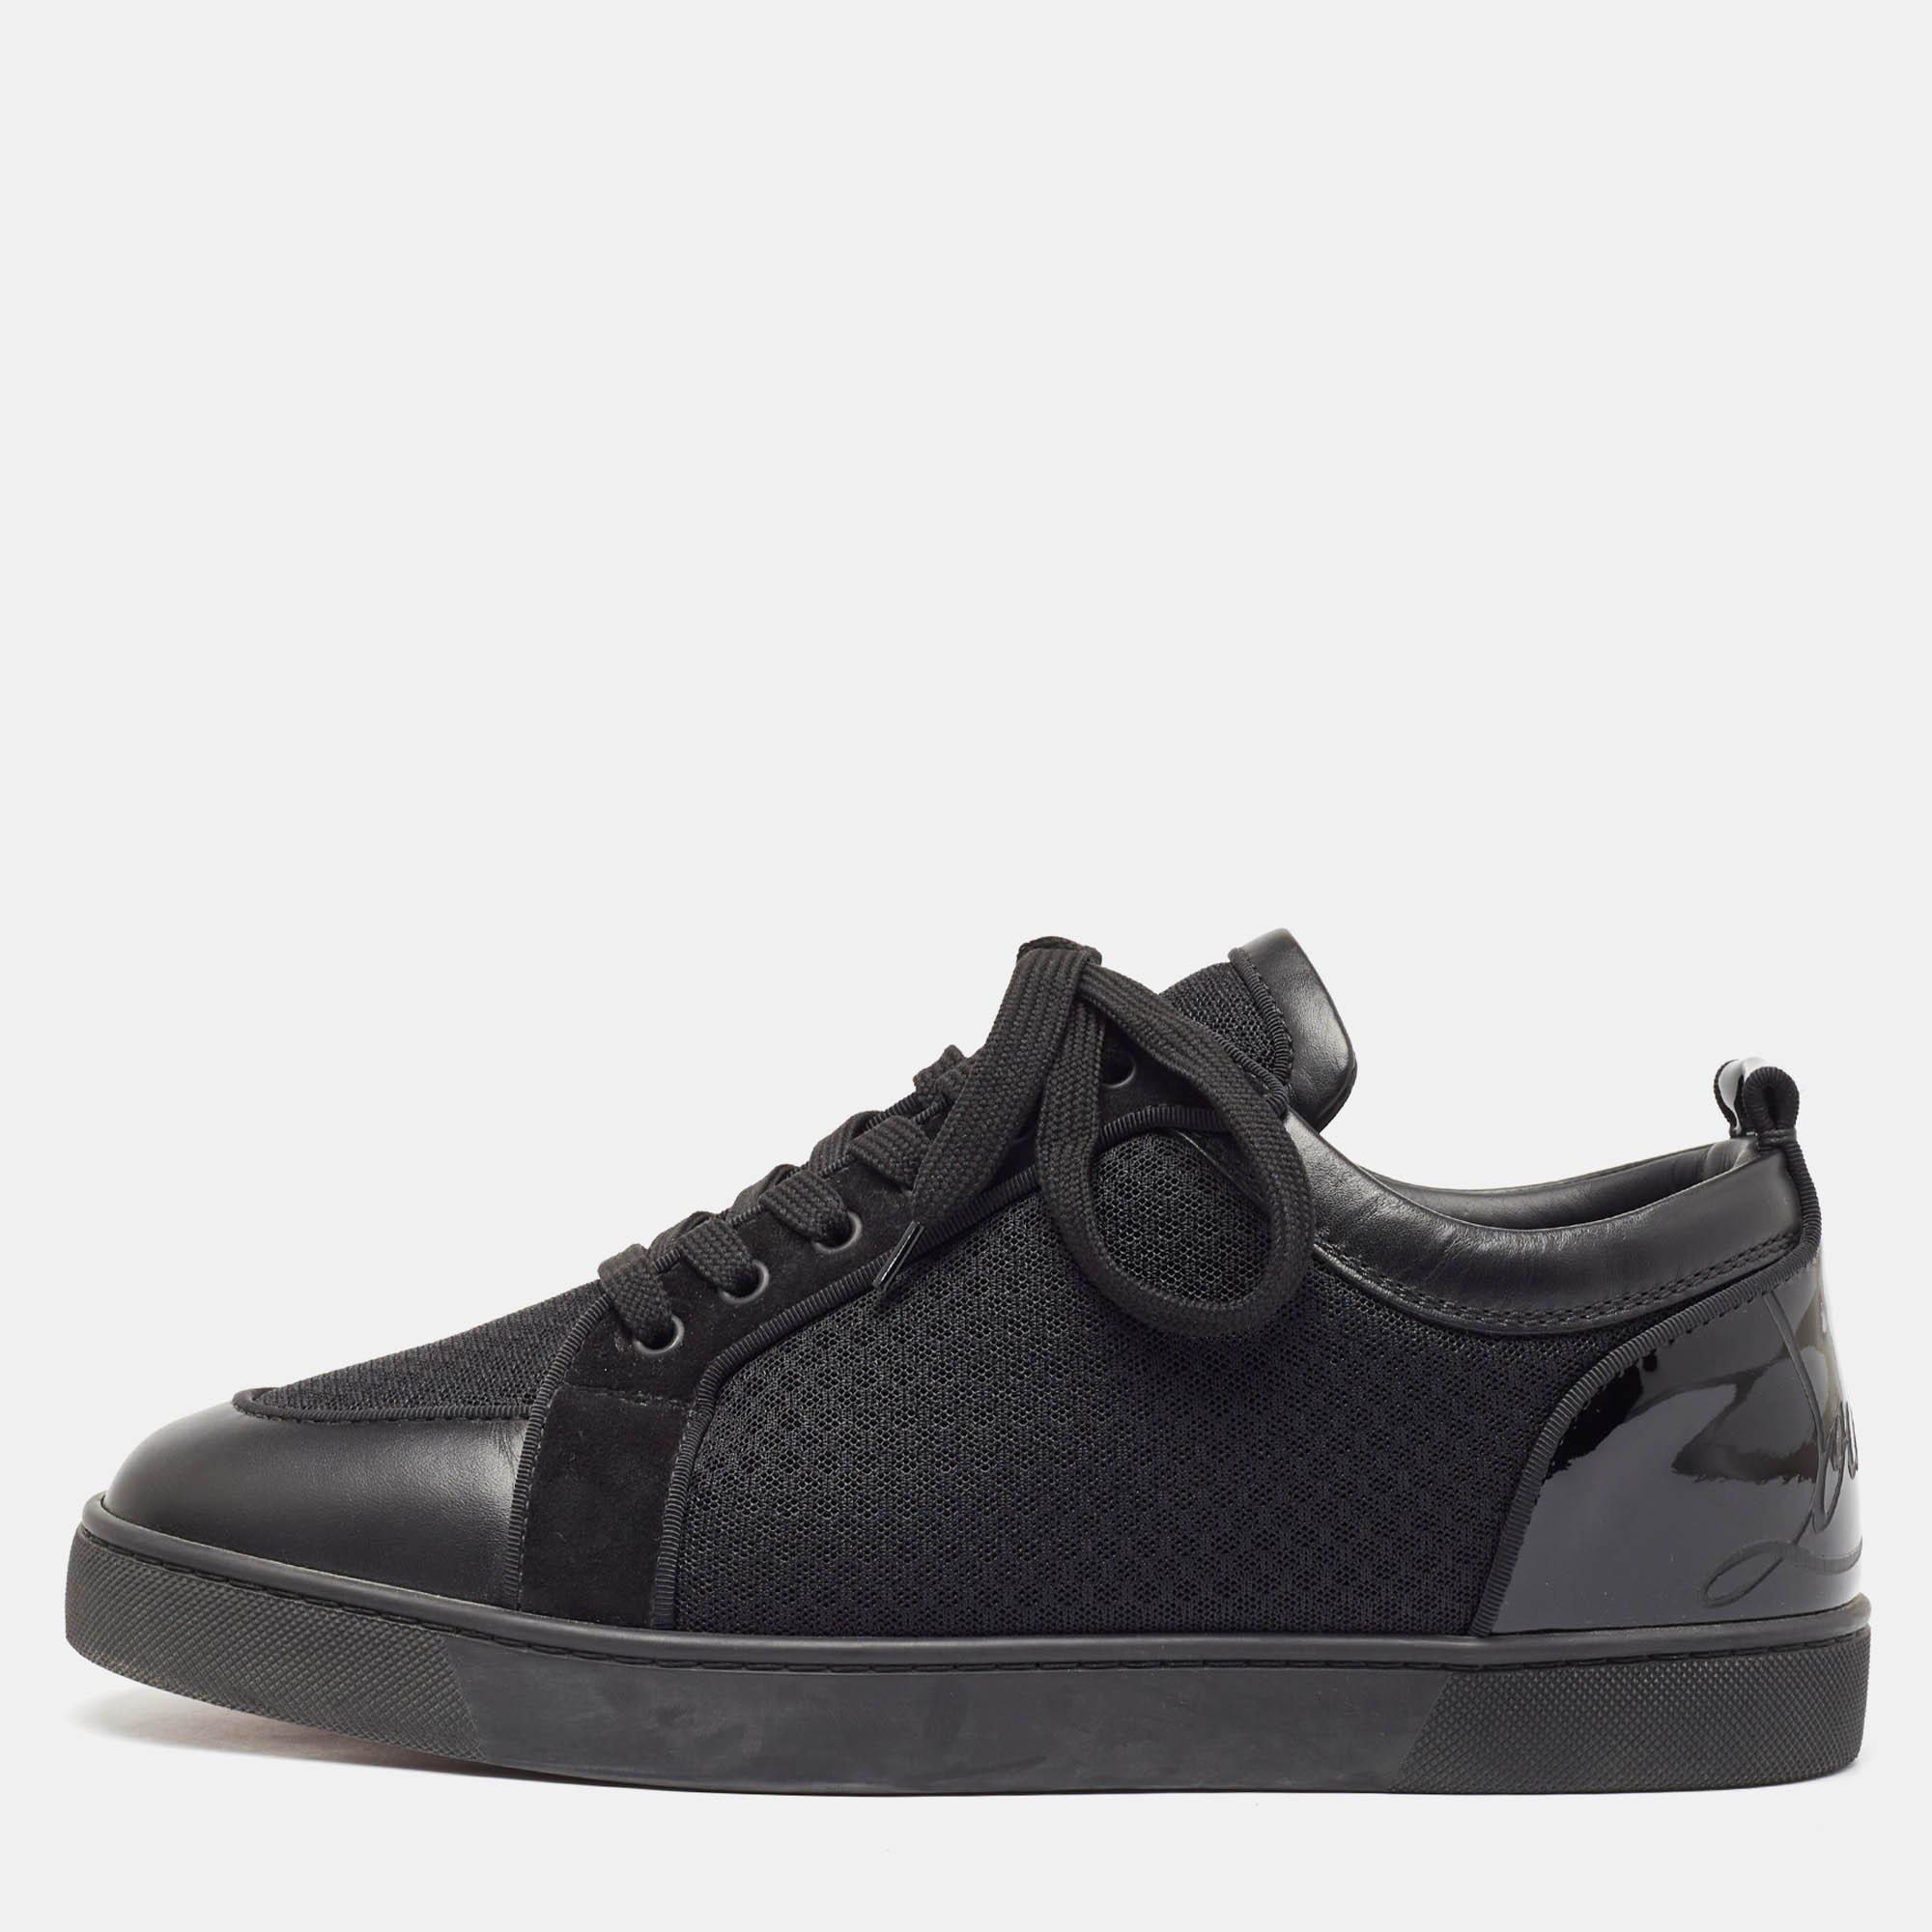 Christian louboutin black leather and mesh fun rantulow sneakers size 45